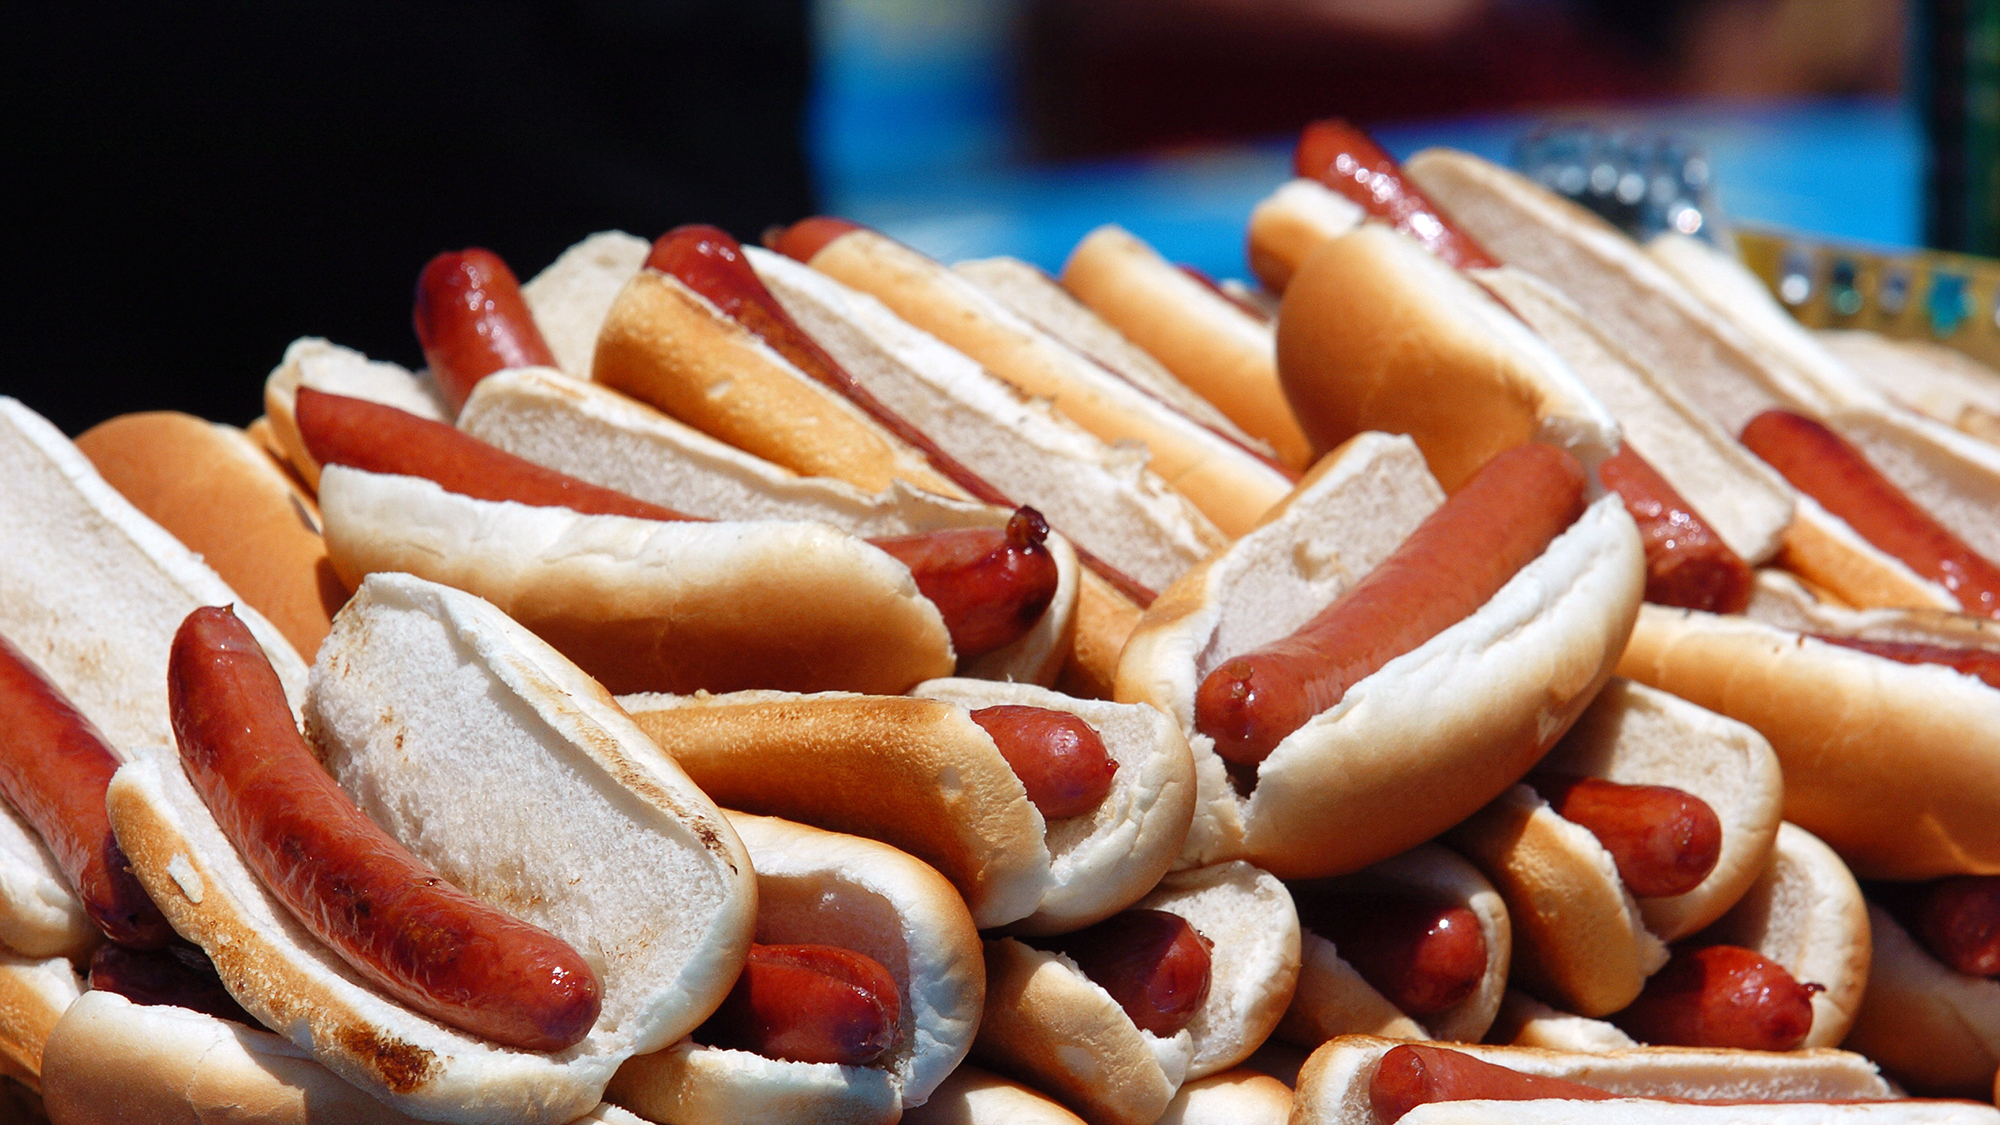 Racing Sausage Week!: The Hot Dog